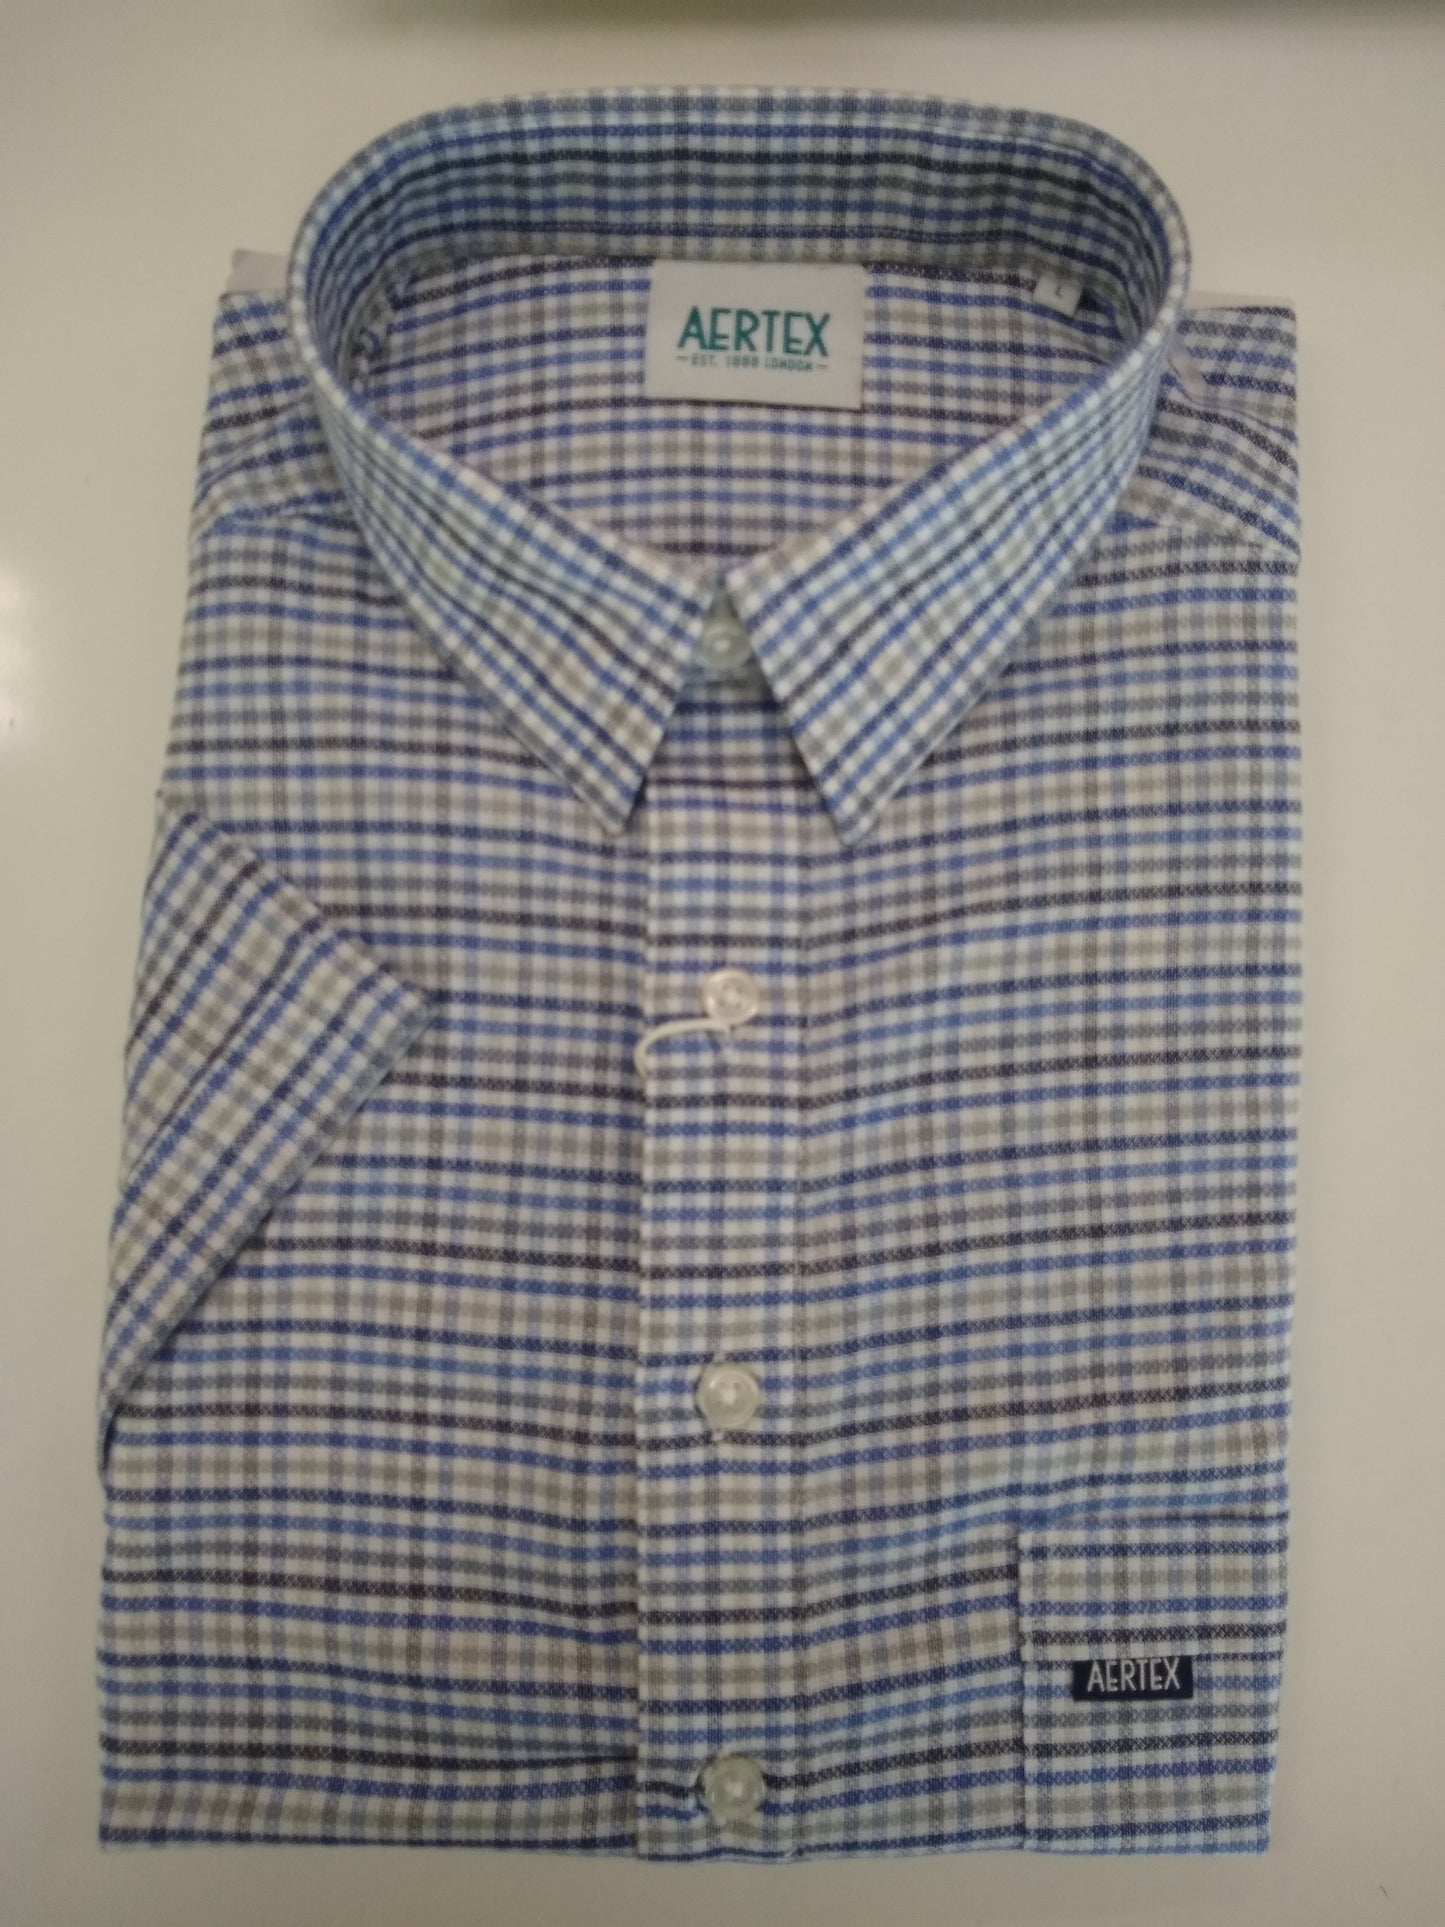 Aertex Taunton Polo Short Sleeve Shirt - FYO186